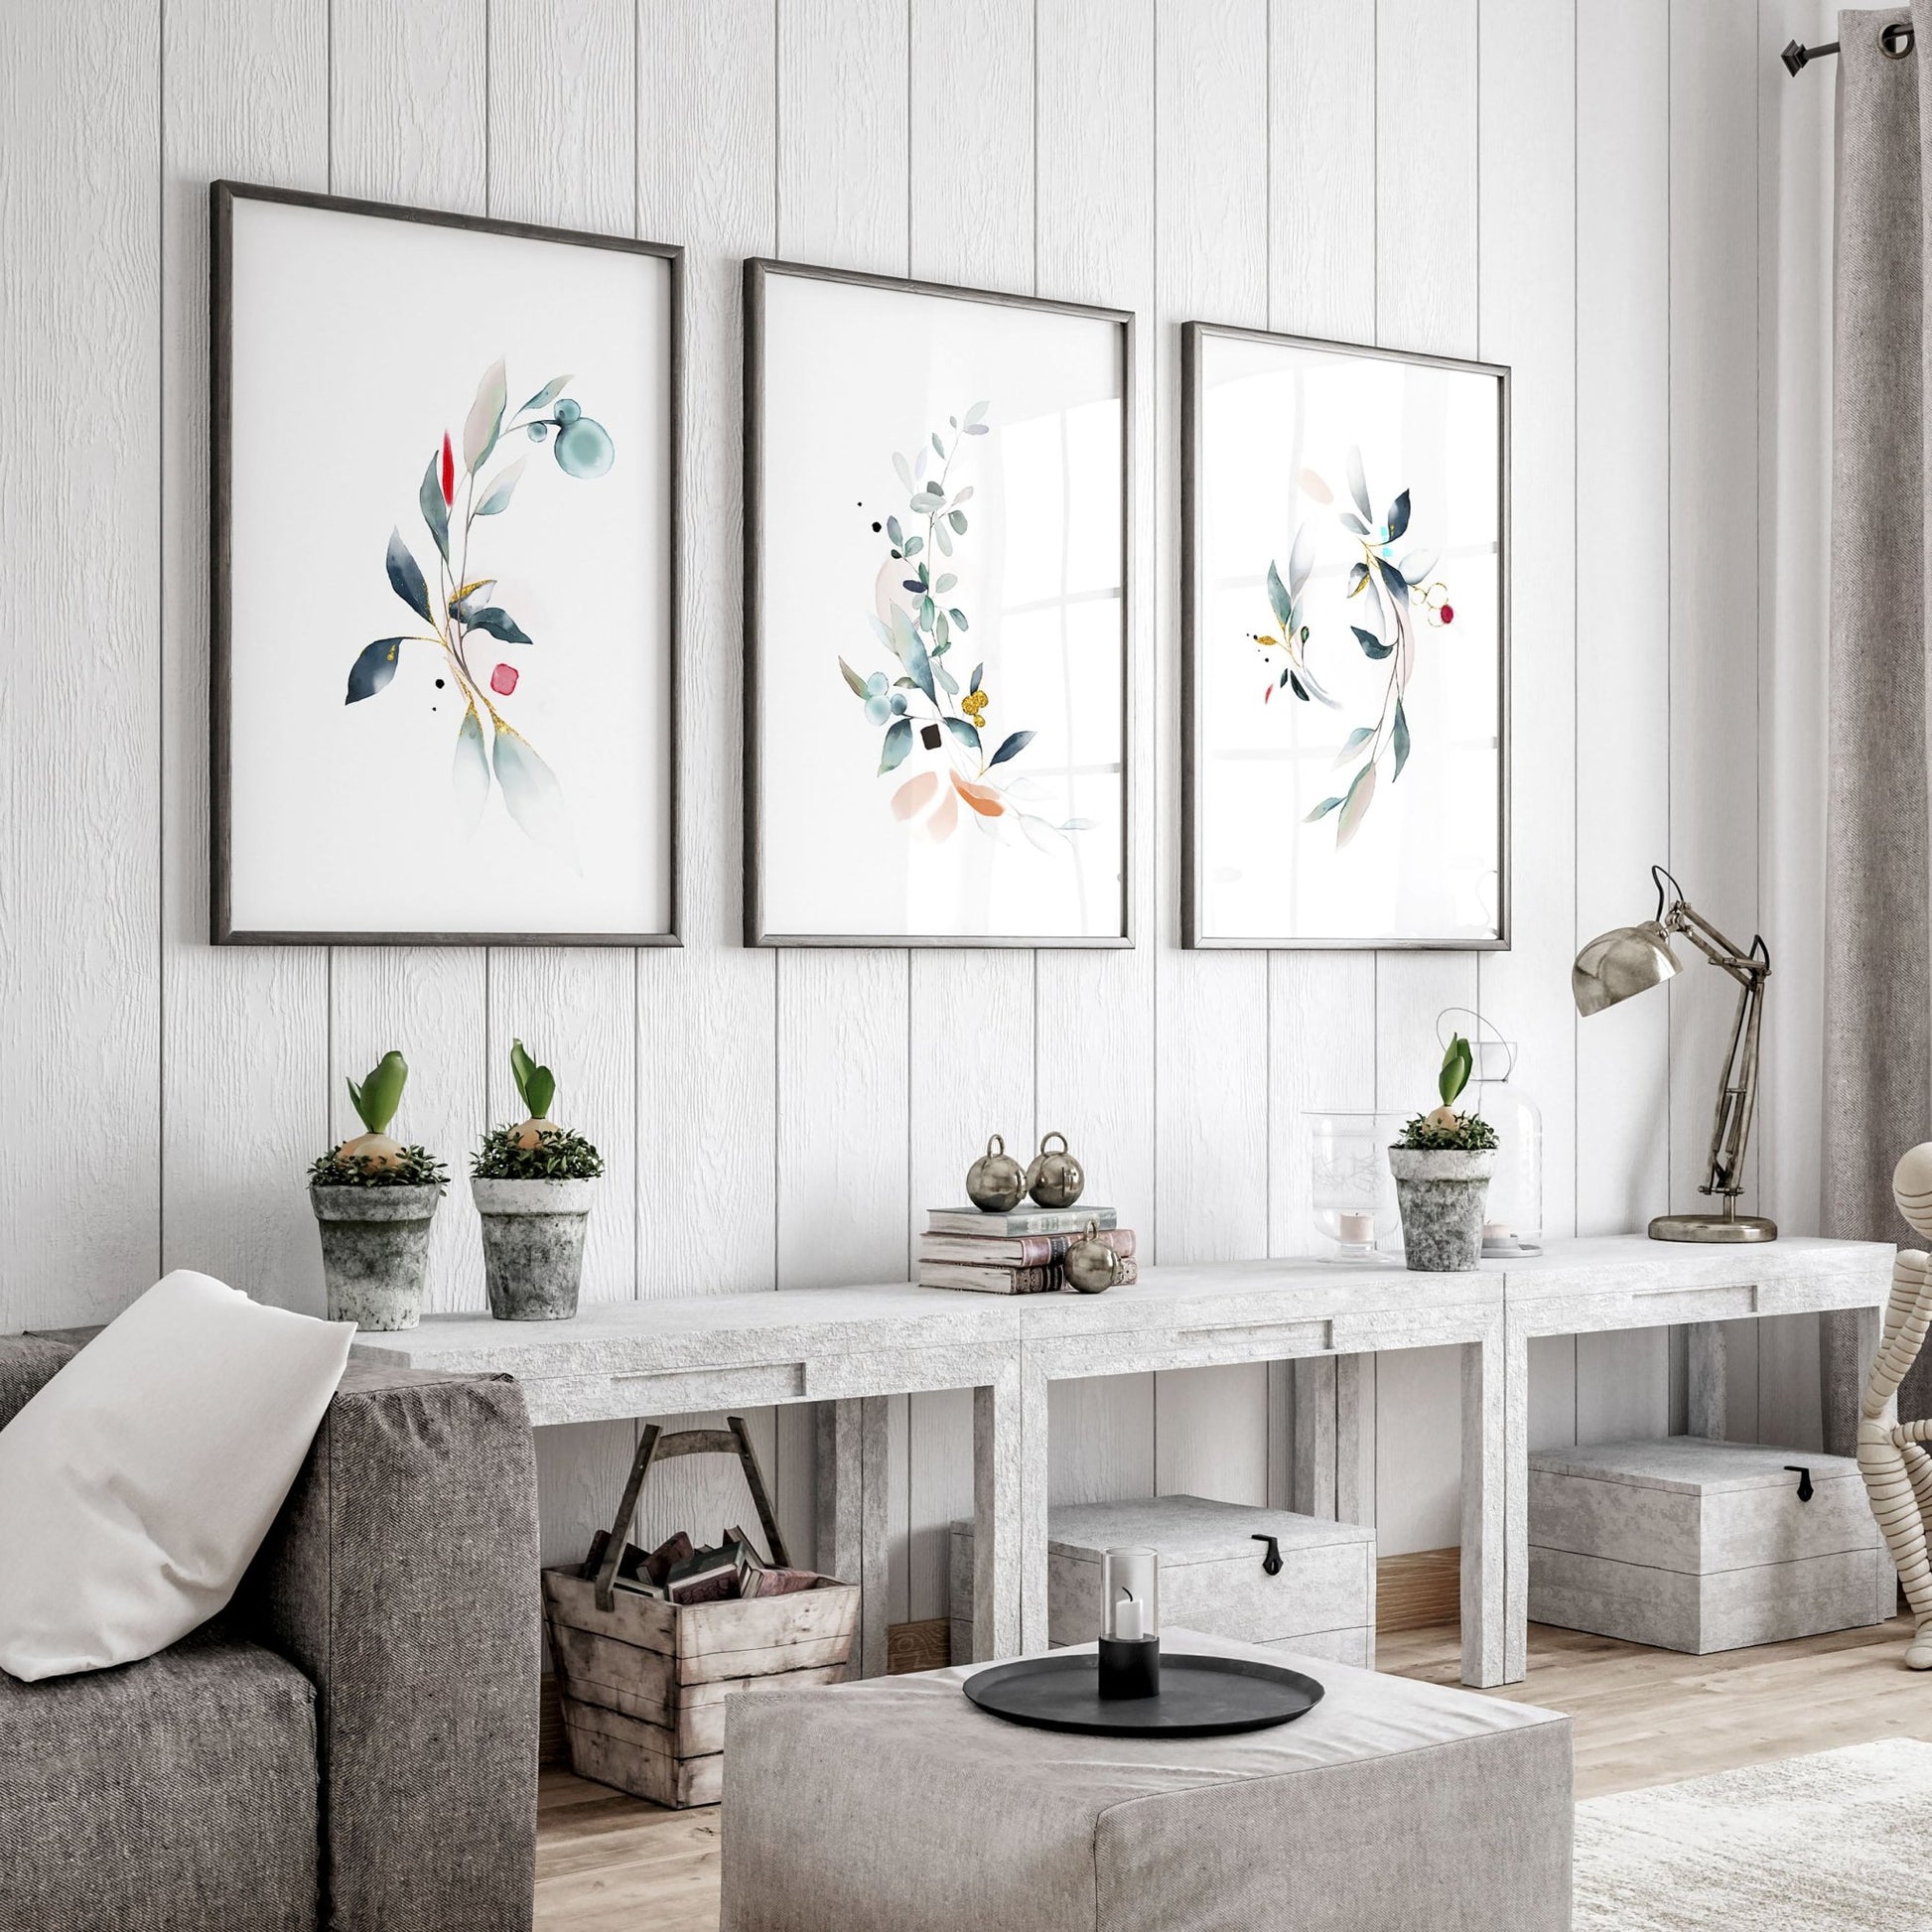 Living room art | set of 3 wall art prints - About Wall Art